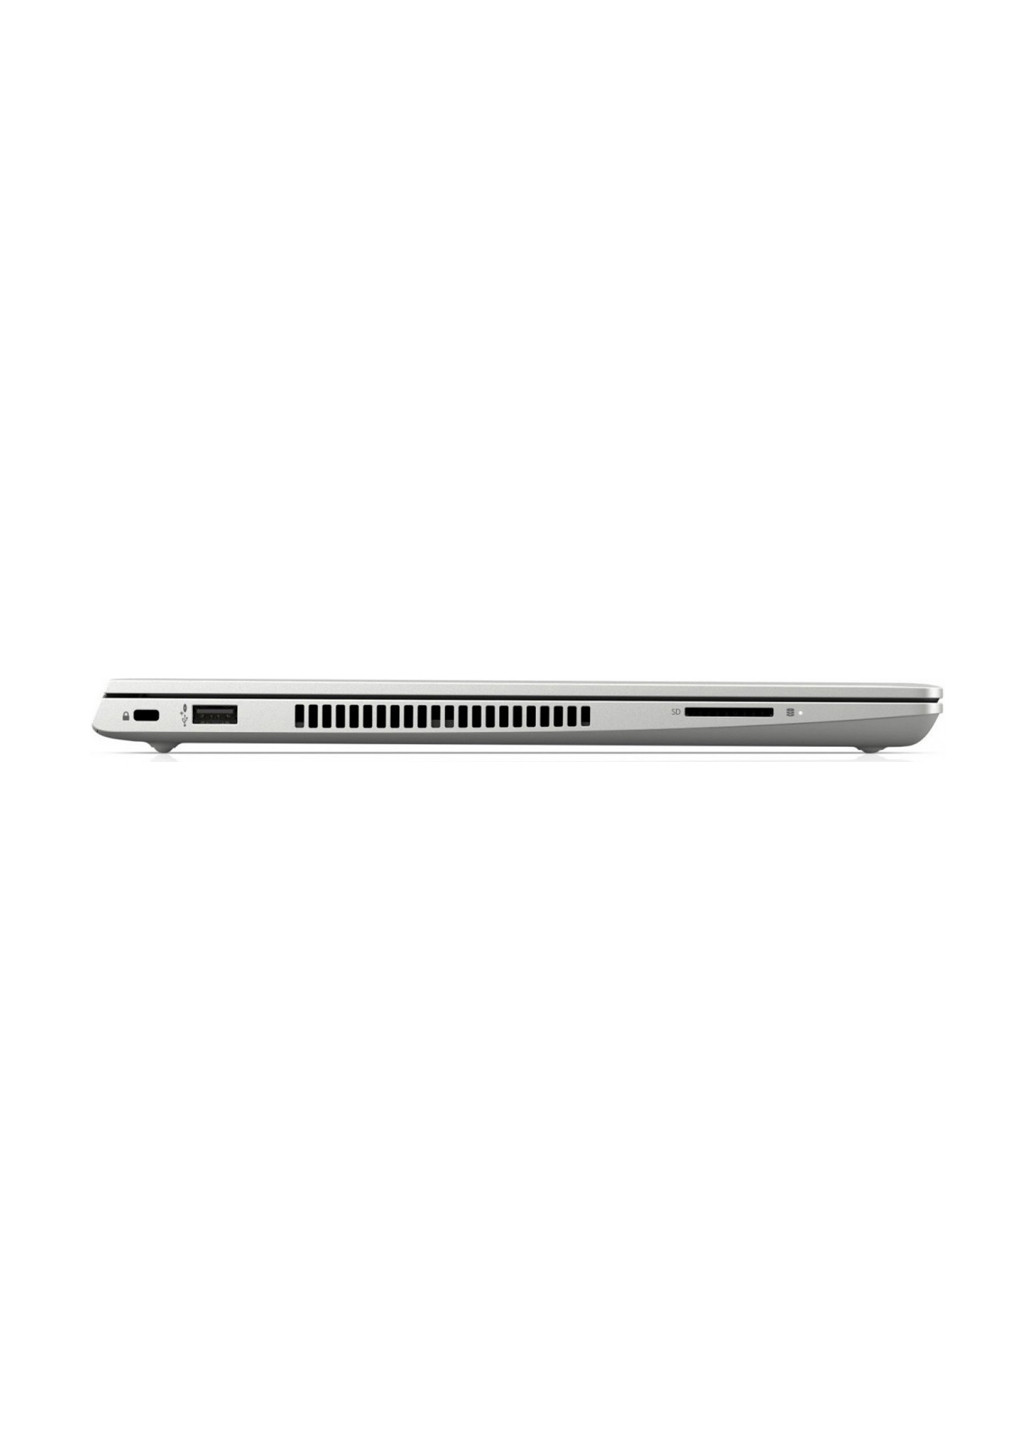 Ноутбук HP probook 440 g6 (4rz53av_v15) silver (173921826)